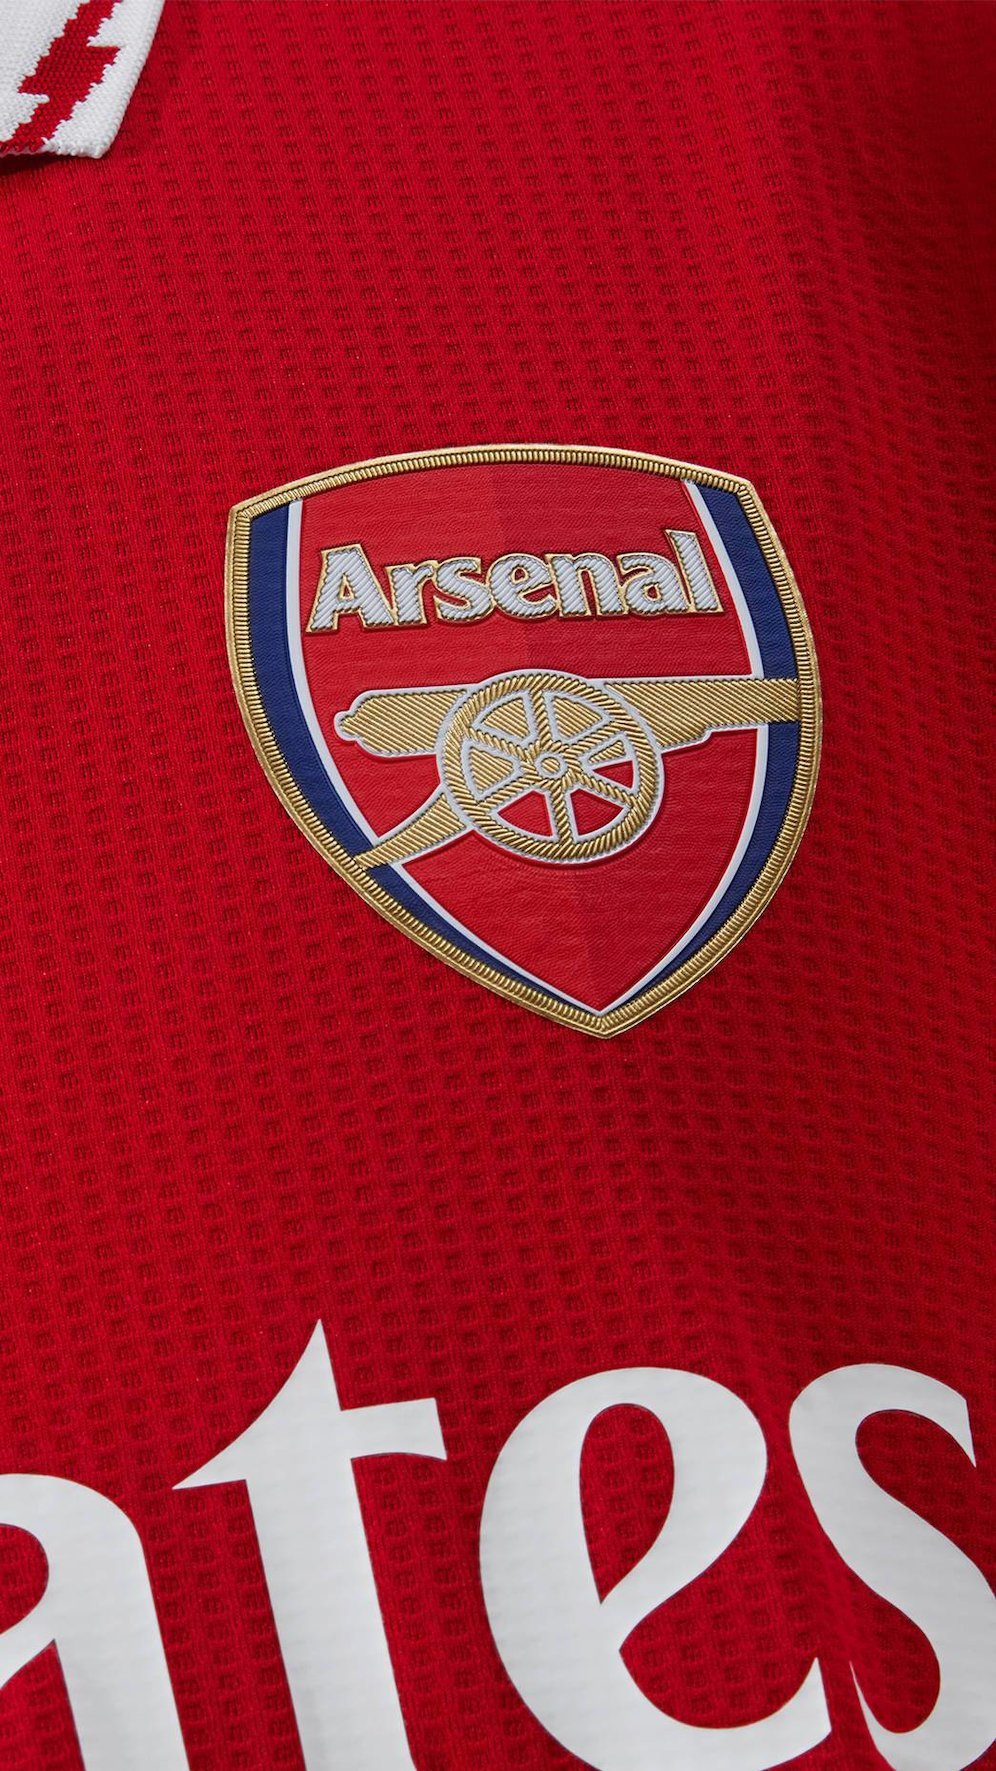 Penampakan Jersey Kandang Arsenal 2022/23 (c) Arsenal FC